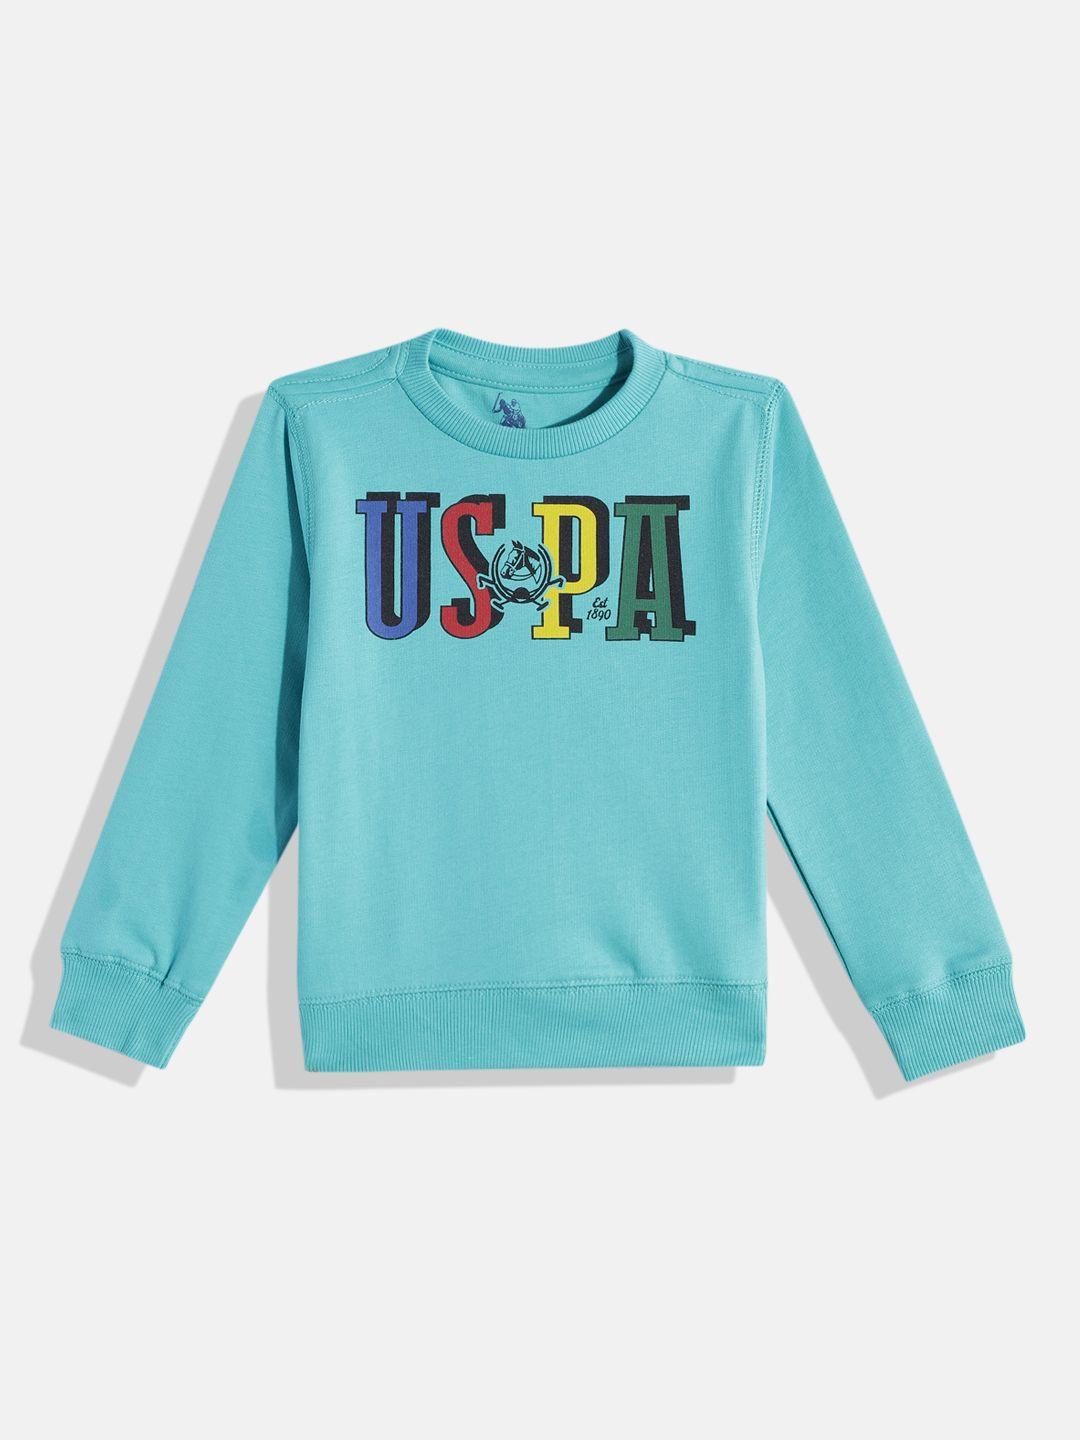 u.s. polo assn. kids boys light blue brand logo print pure cotton sweatshirt